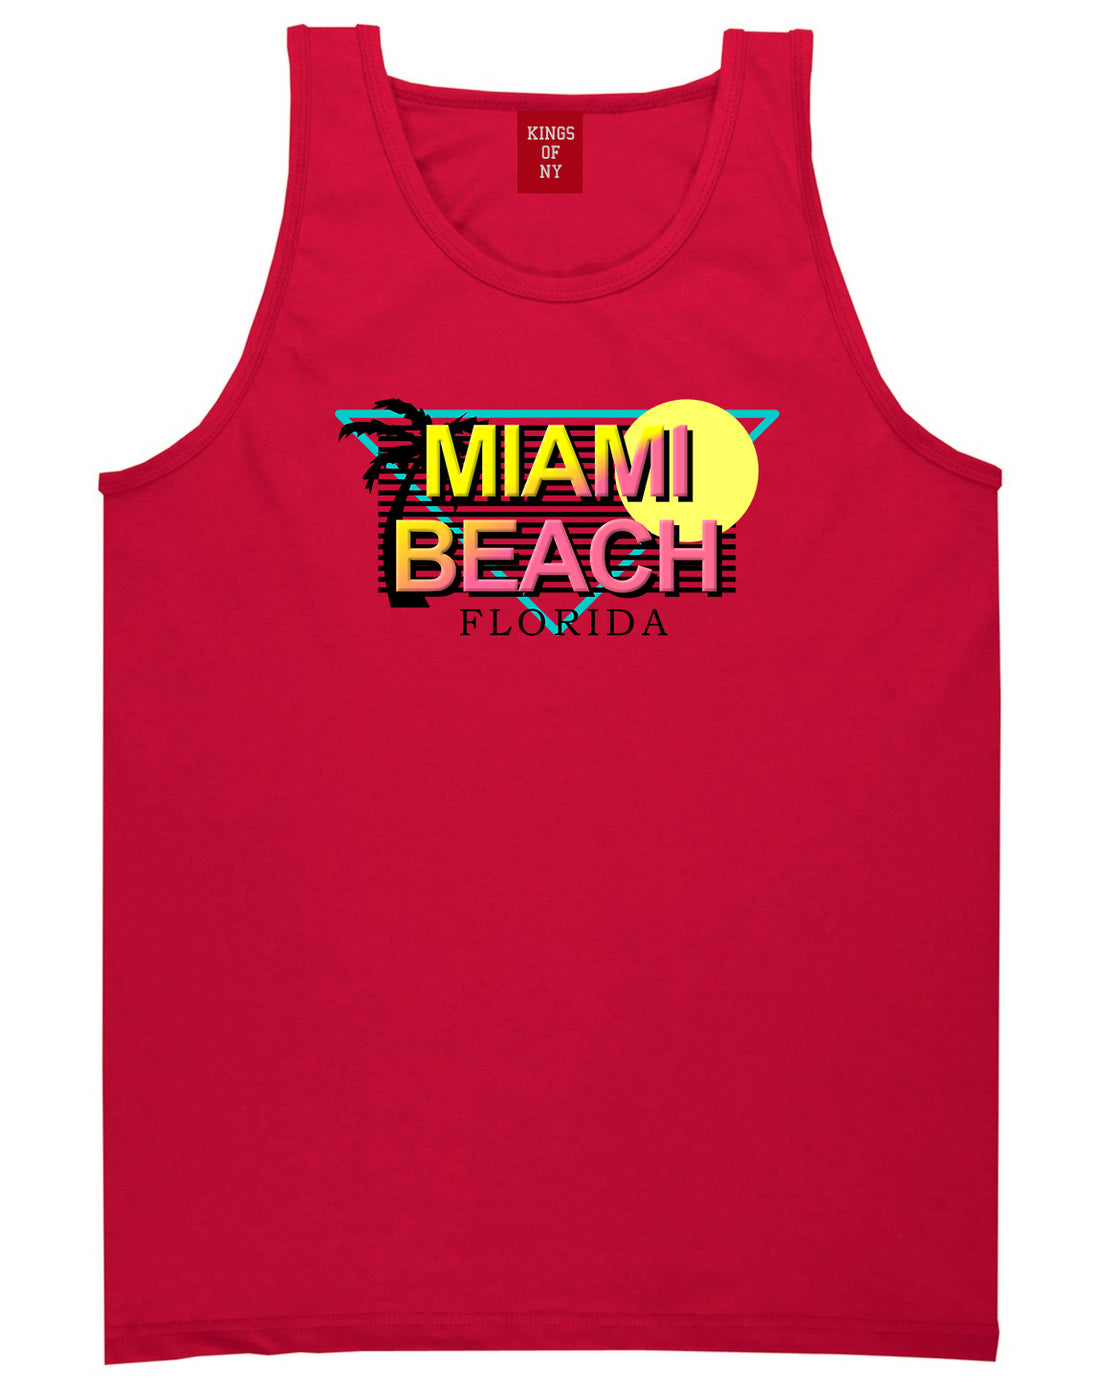 Miami Beach Retro Souvenir Mens Tank Top Shirt Red by Kings Of NY